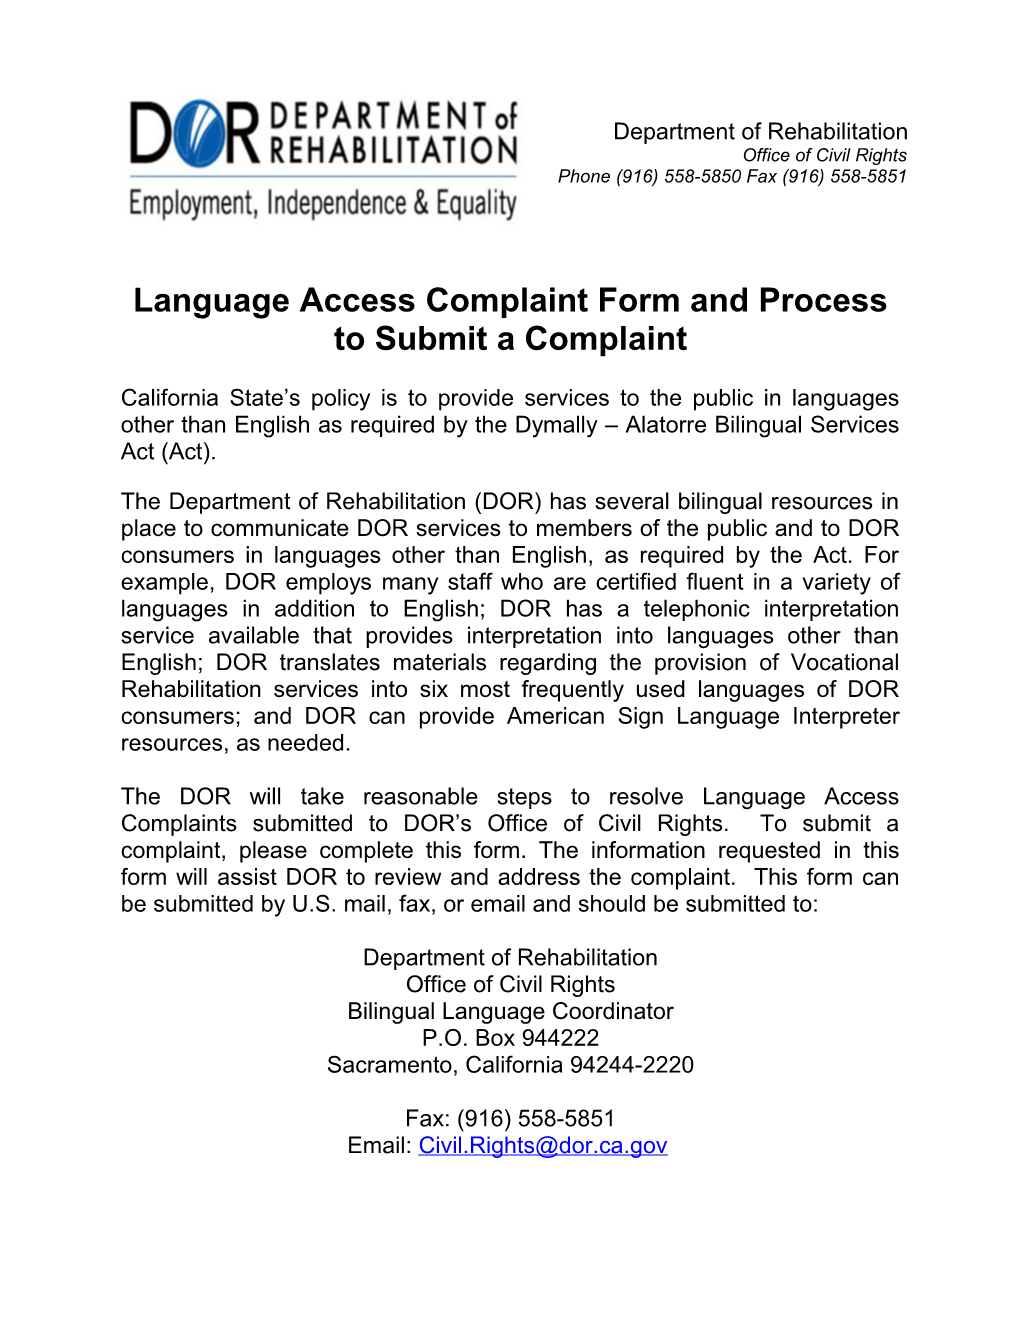 CAL FIRE Language Access Complaint Form - English